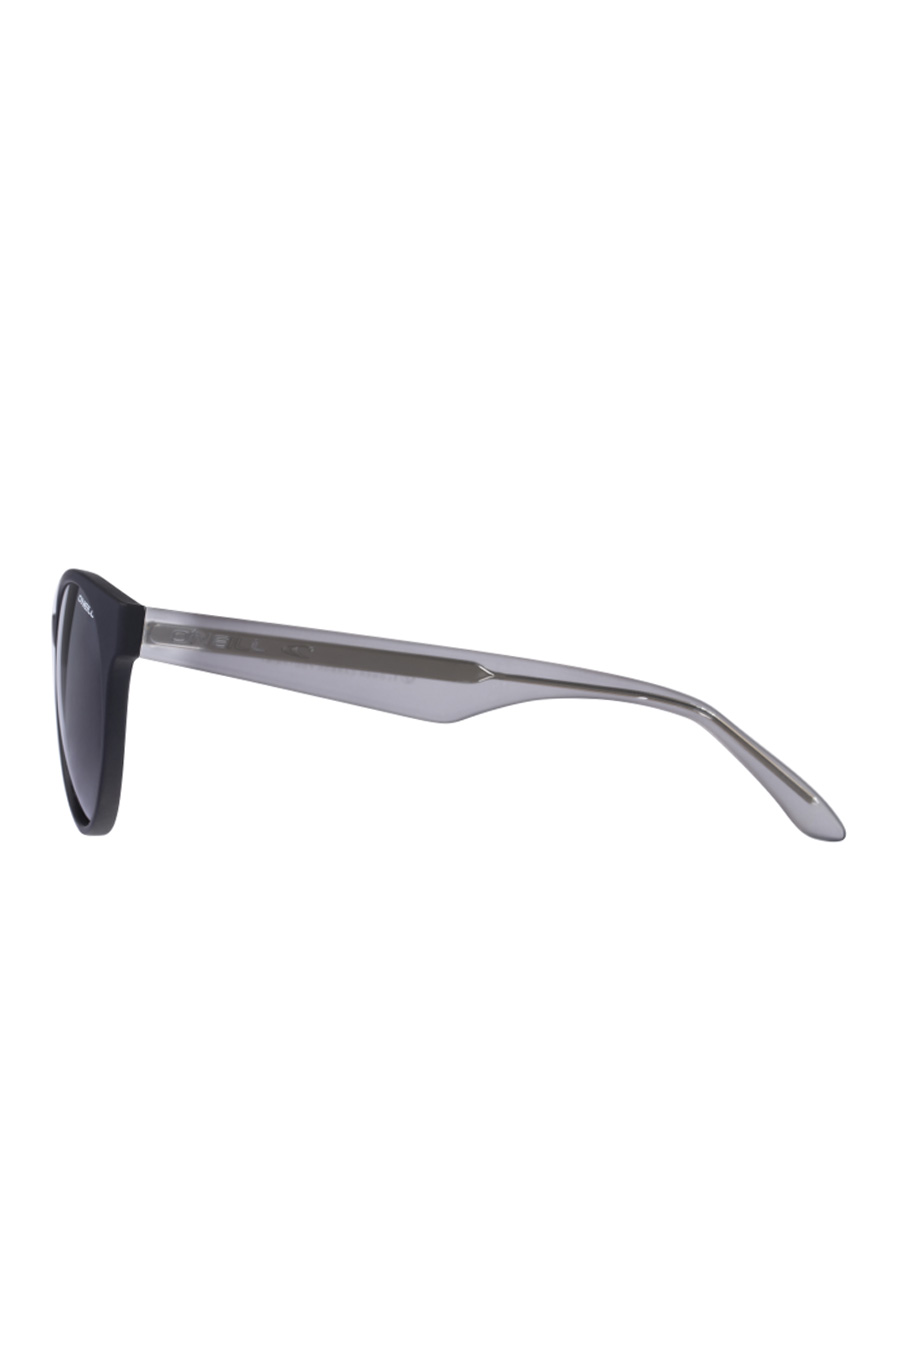 Sunglasses ONEILL ONS-9009-20-104P